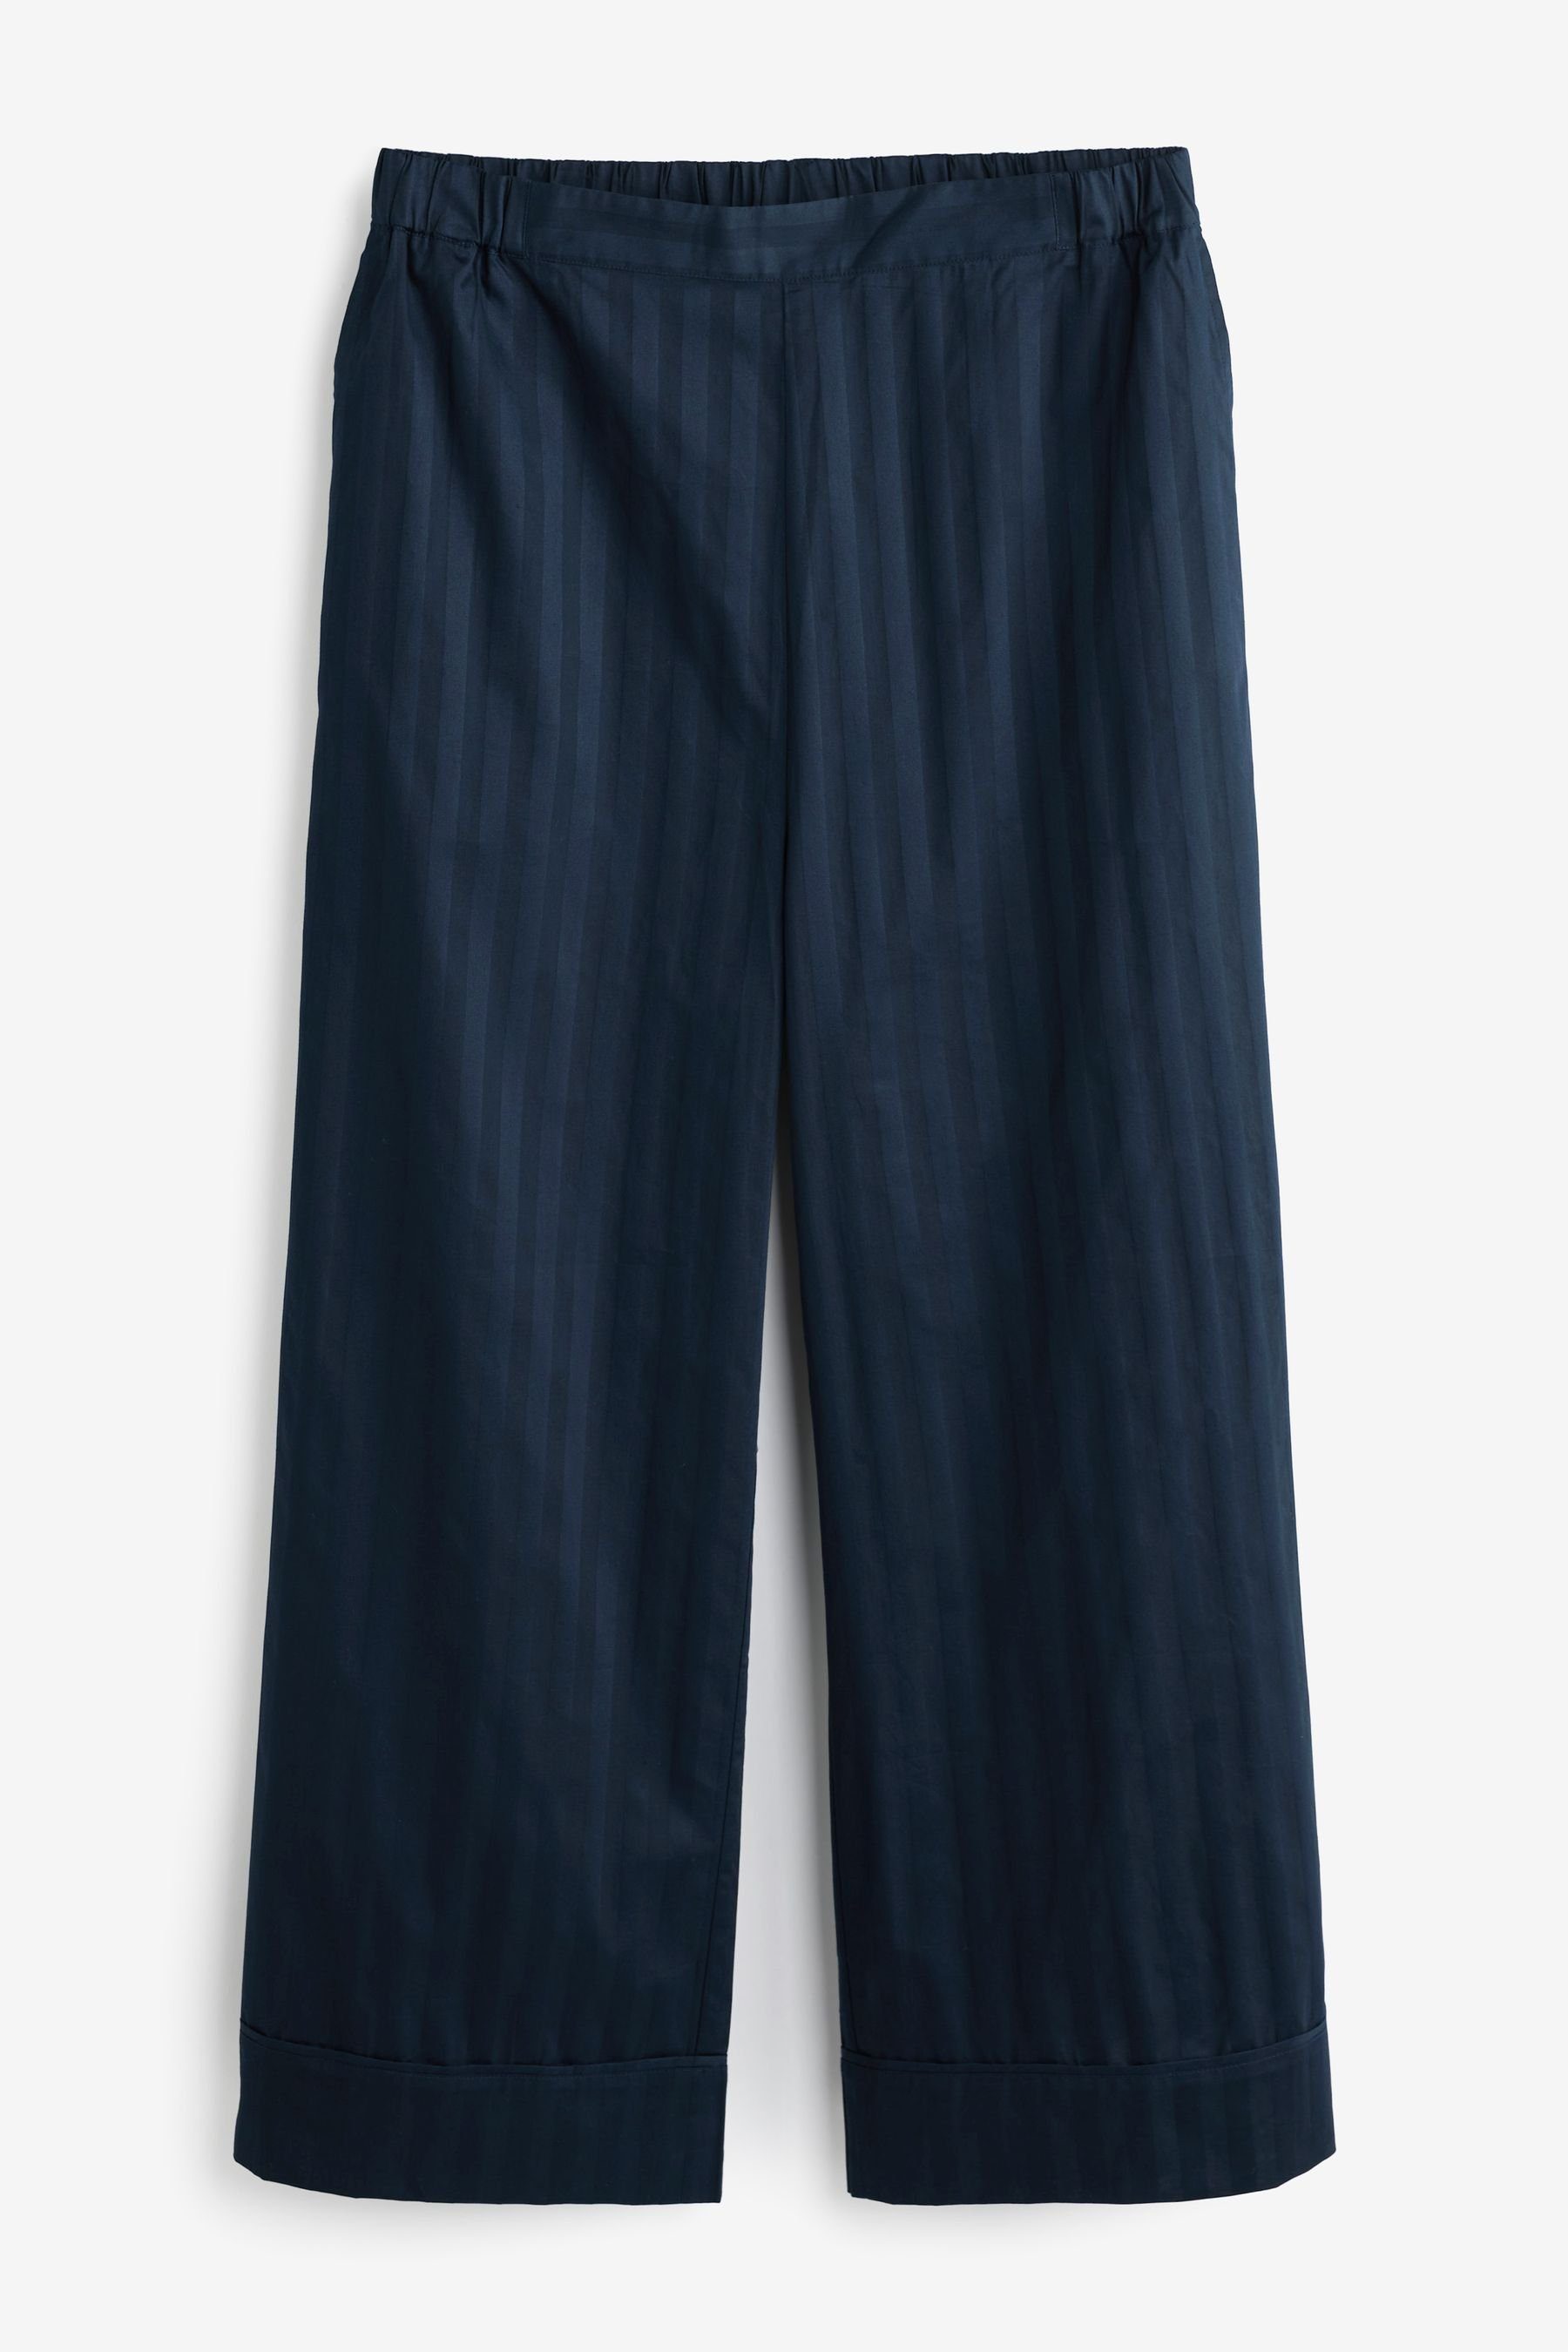 Next Pyjama Luxe Premium Pyjama-Set tlg) aus (2 Baumwolle Blue Navy